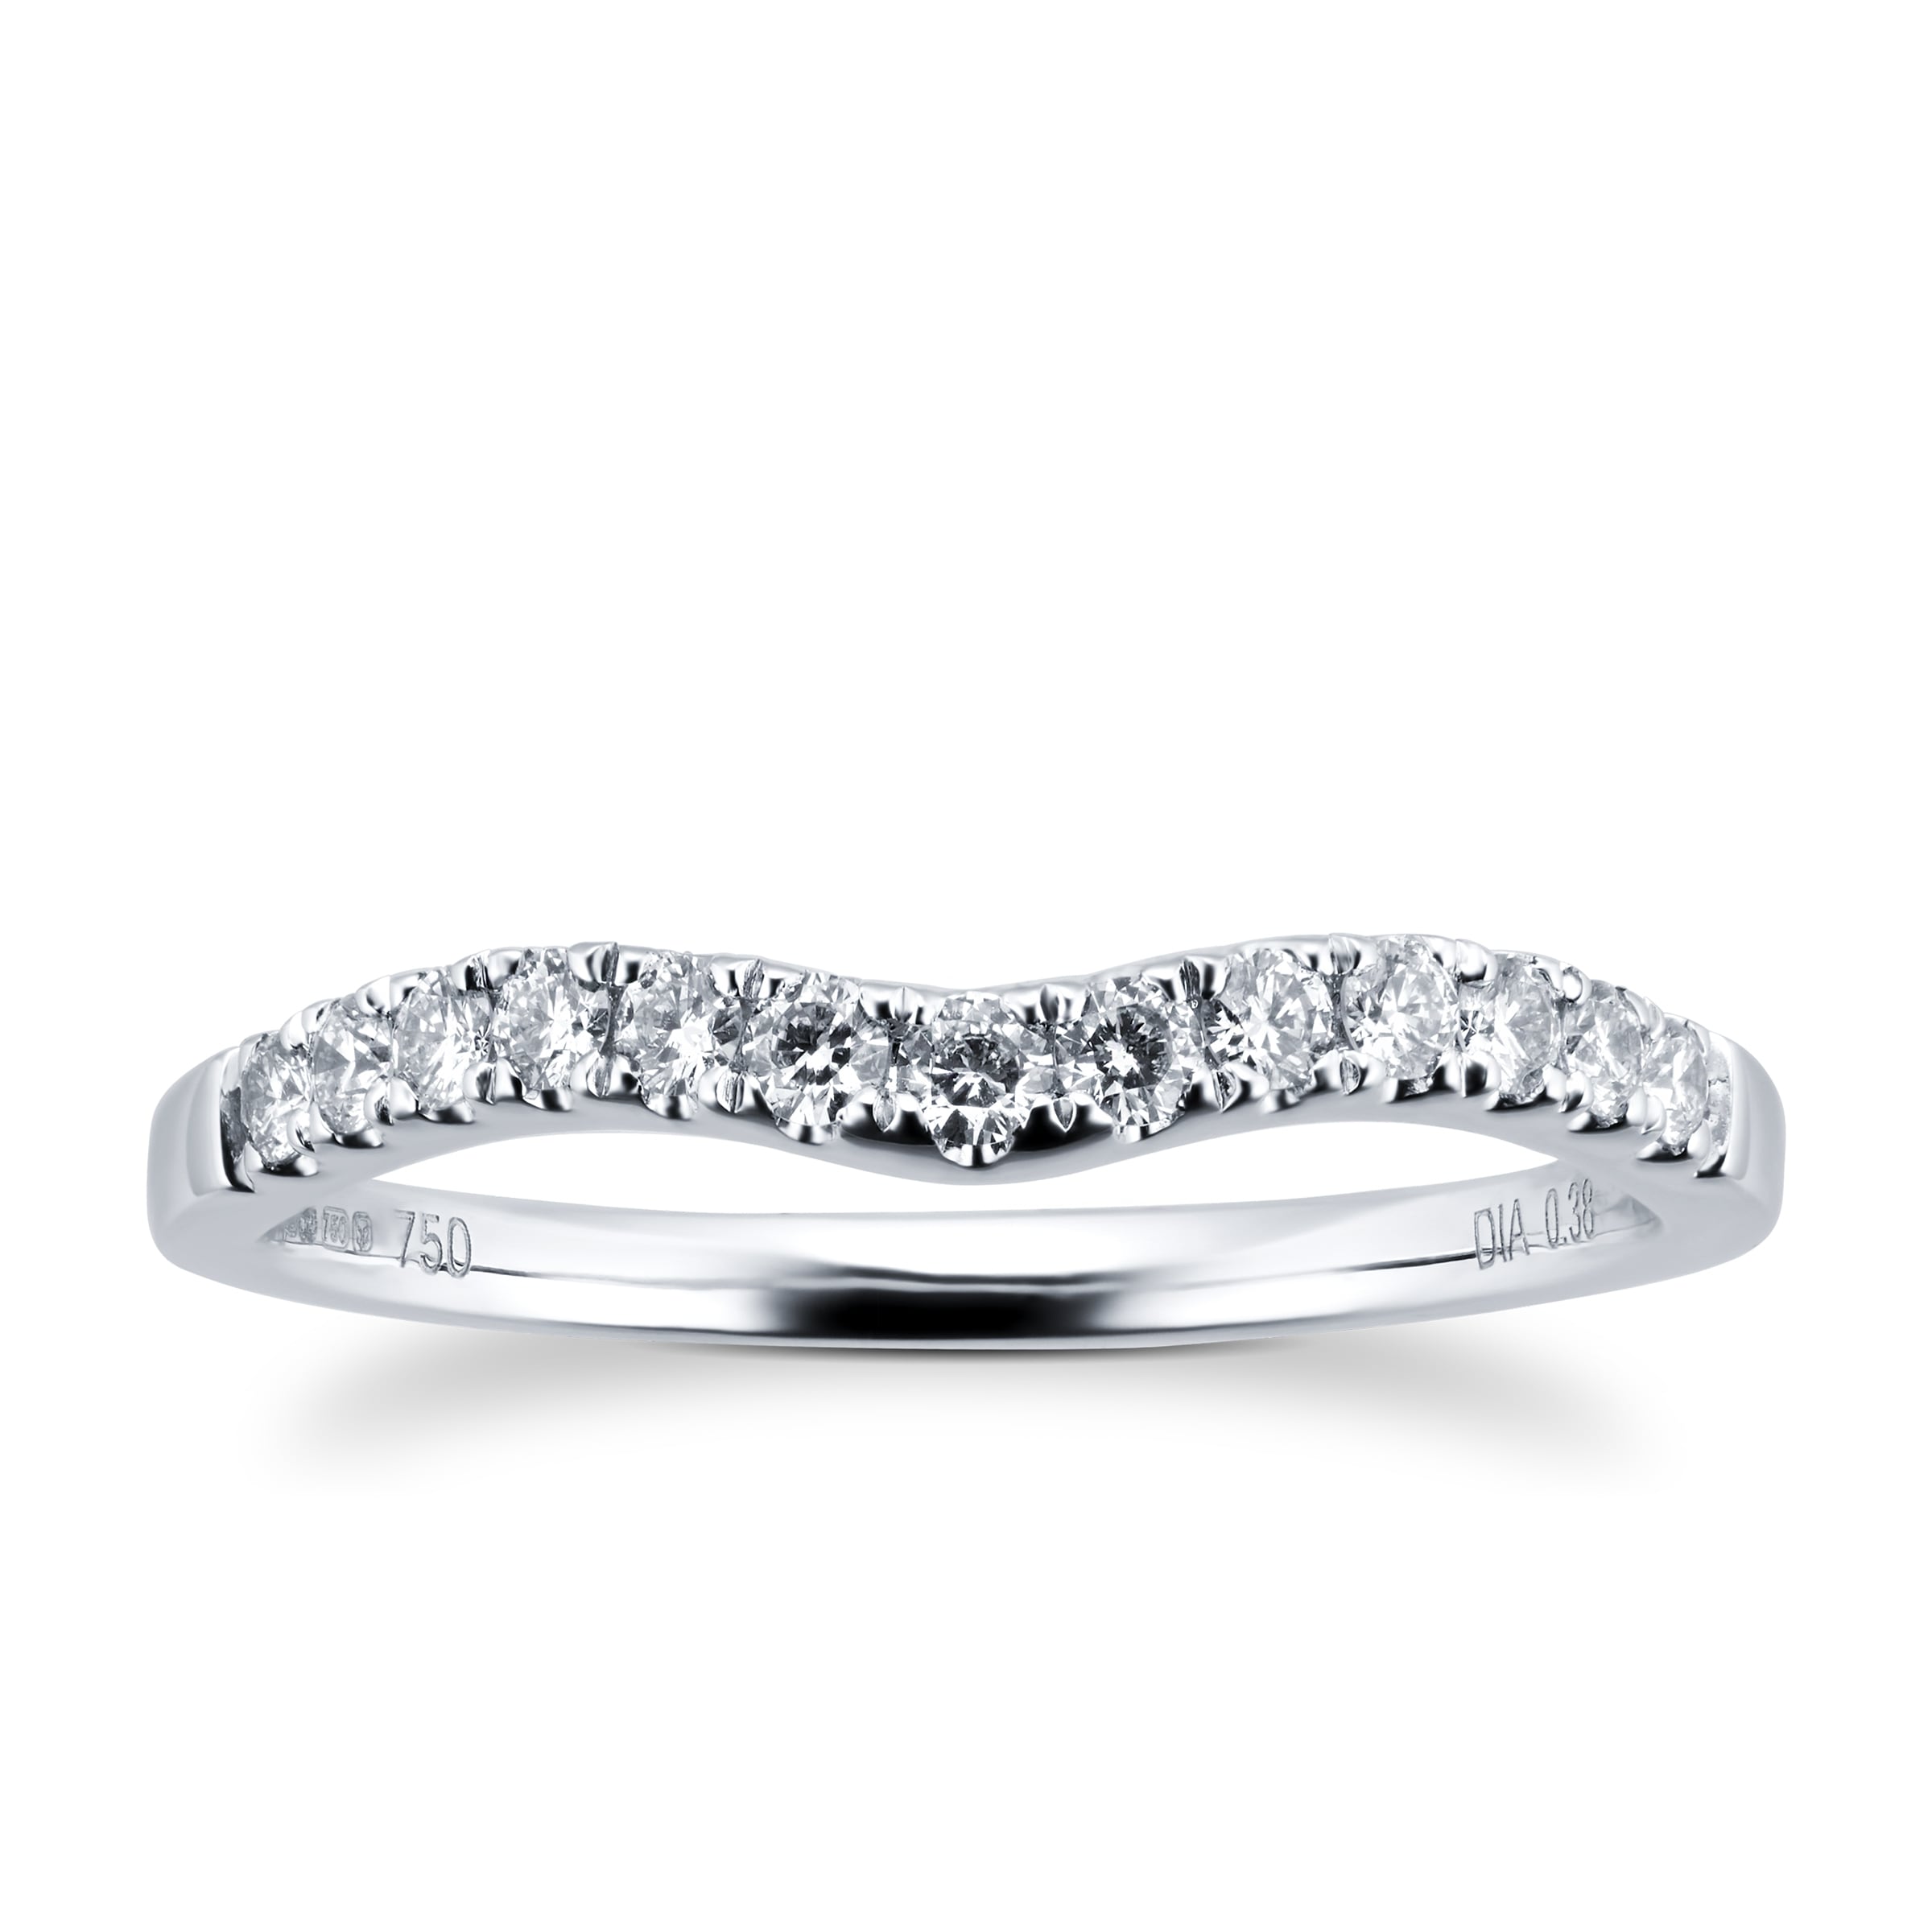 Brilliant Cut 0.38 Carat Total Weight Diamond Set Ladies Shaped Wedding Ring In 18 Carat White Gold - Ring Size K